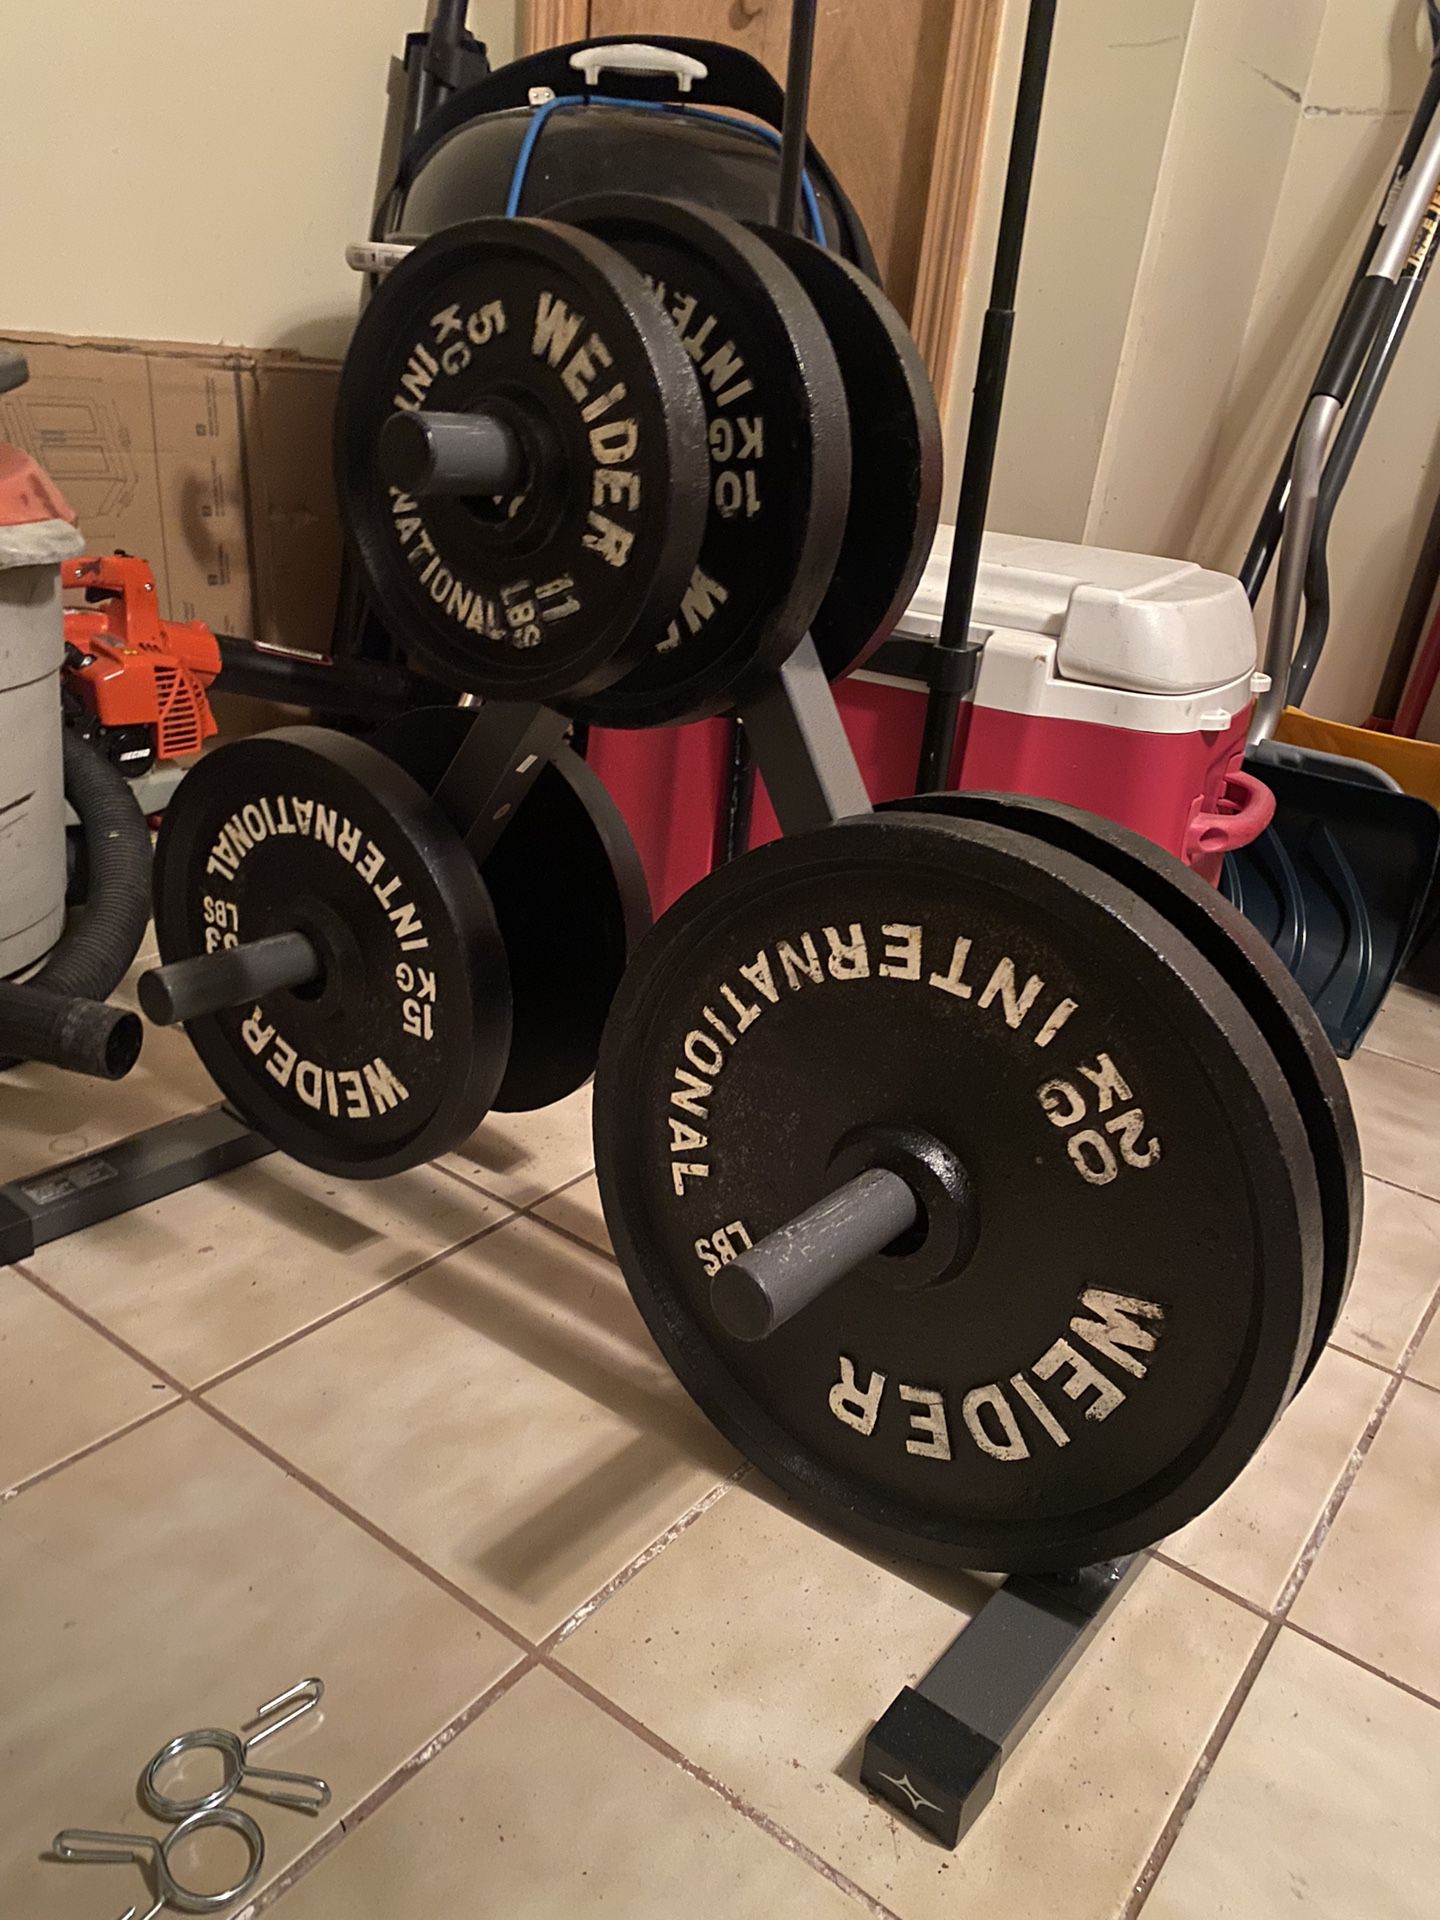 Free weights, Bench ,  Bar,  curl bar ( Workout)